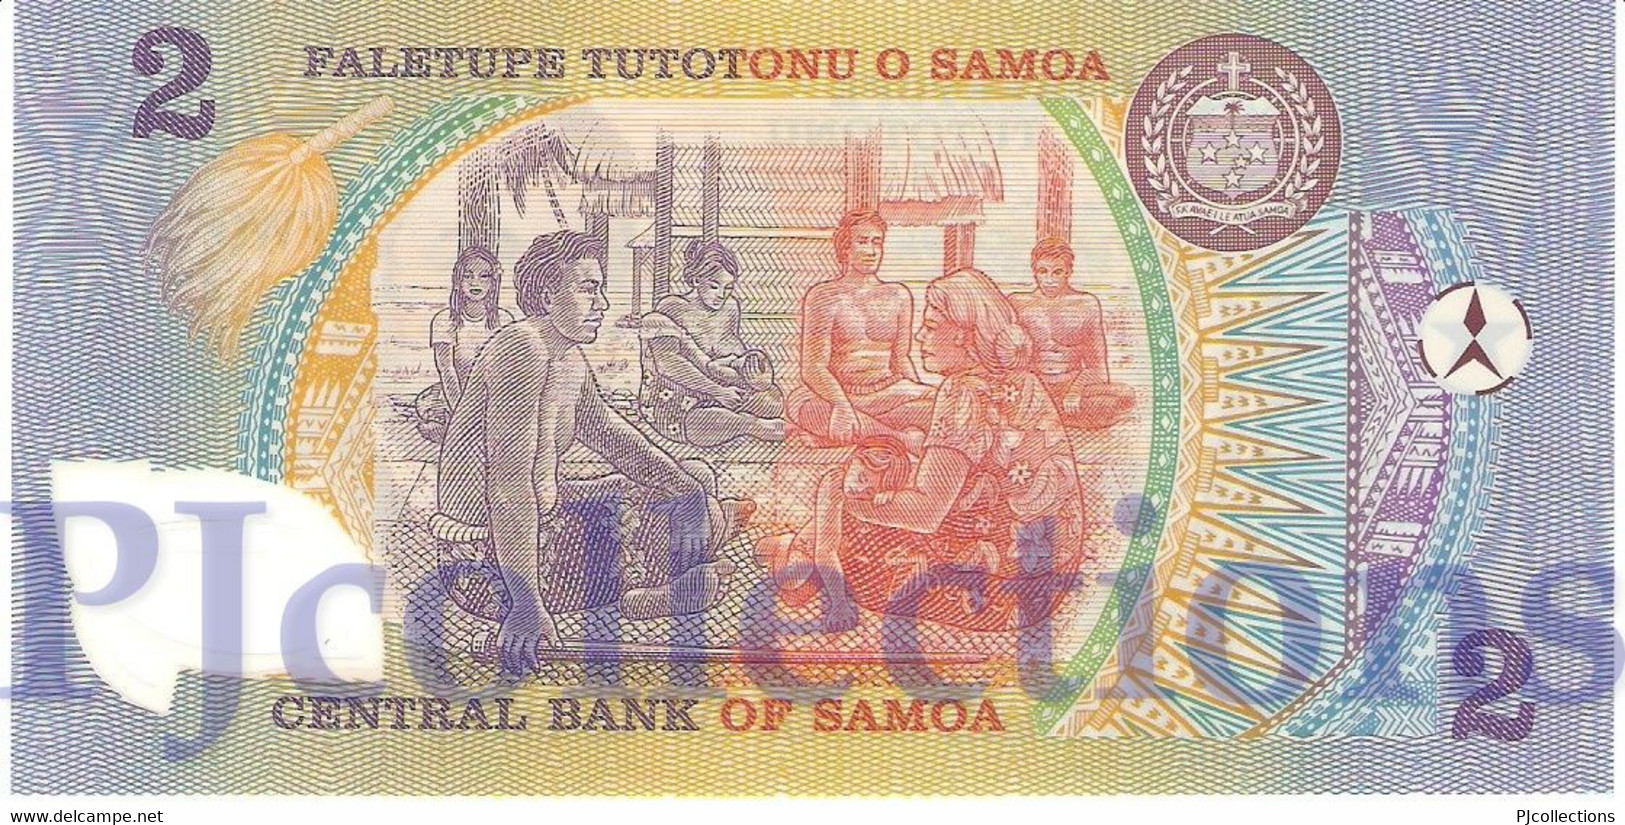 SAMOA 2 TALA 1990 PICK 31 POLYMER UNC PREFIX "AAN" - Samoa